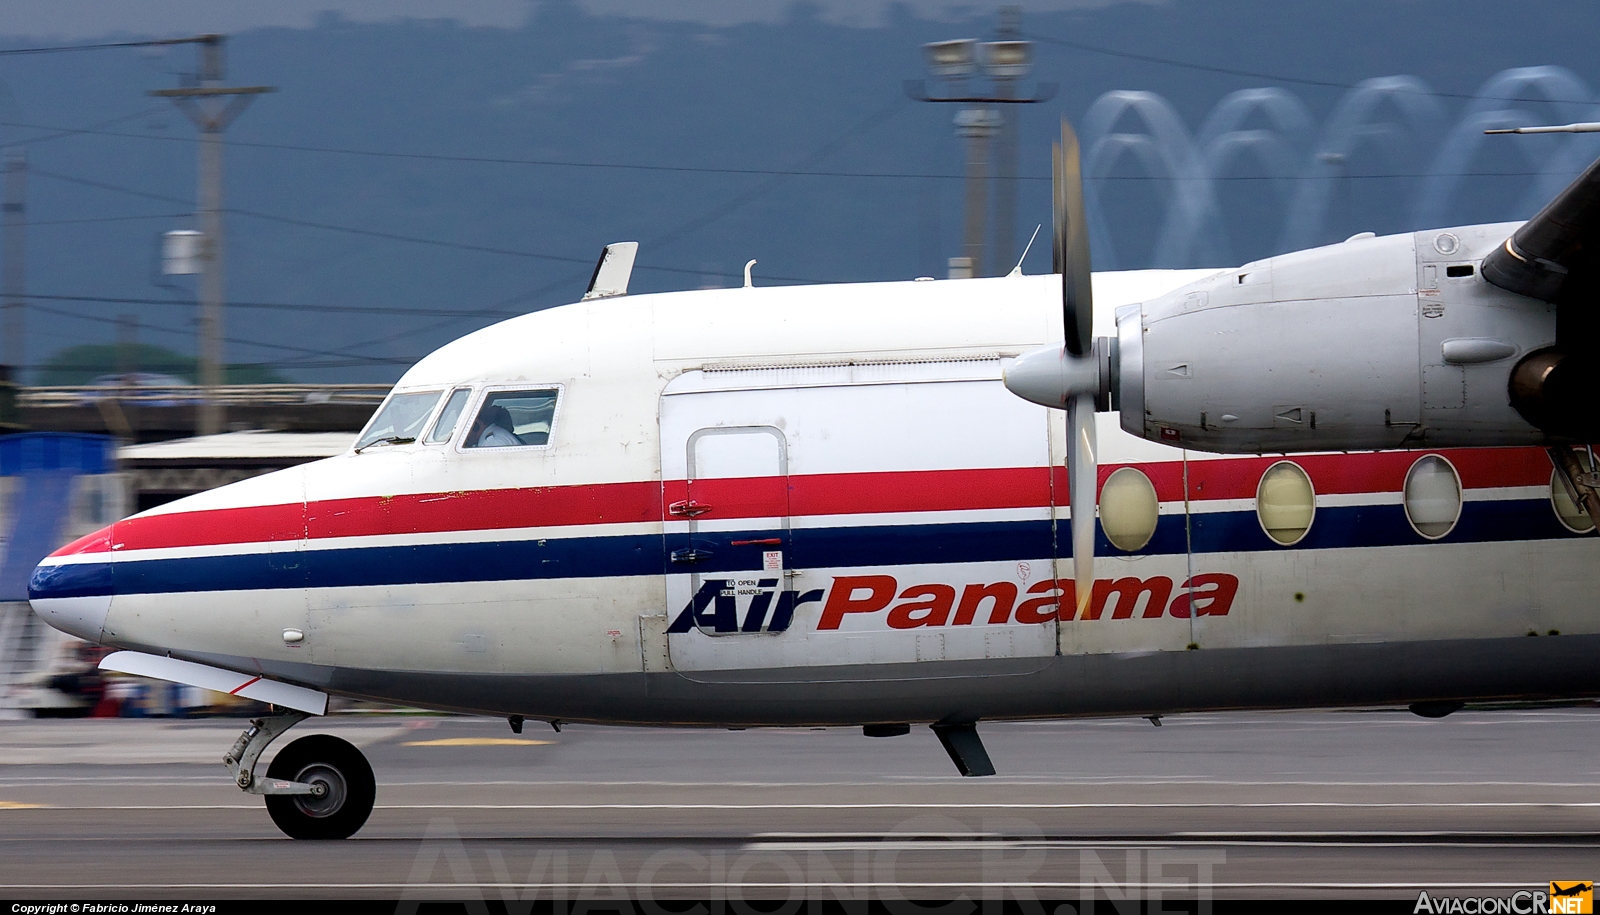 HP-1543PST - Fokker F-27-400 Friendship - Air Panama